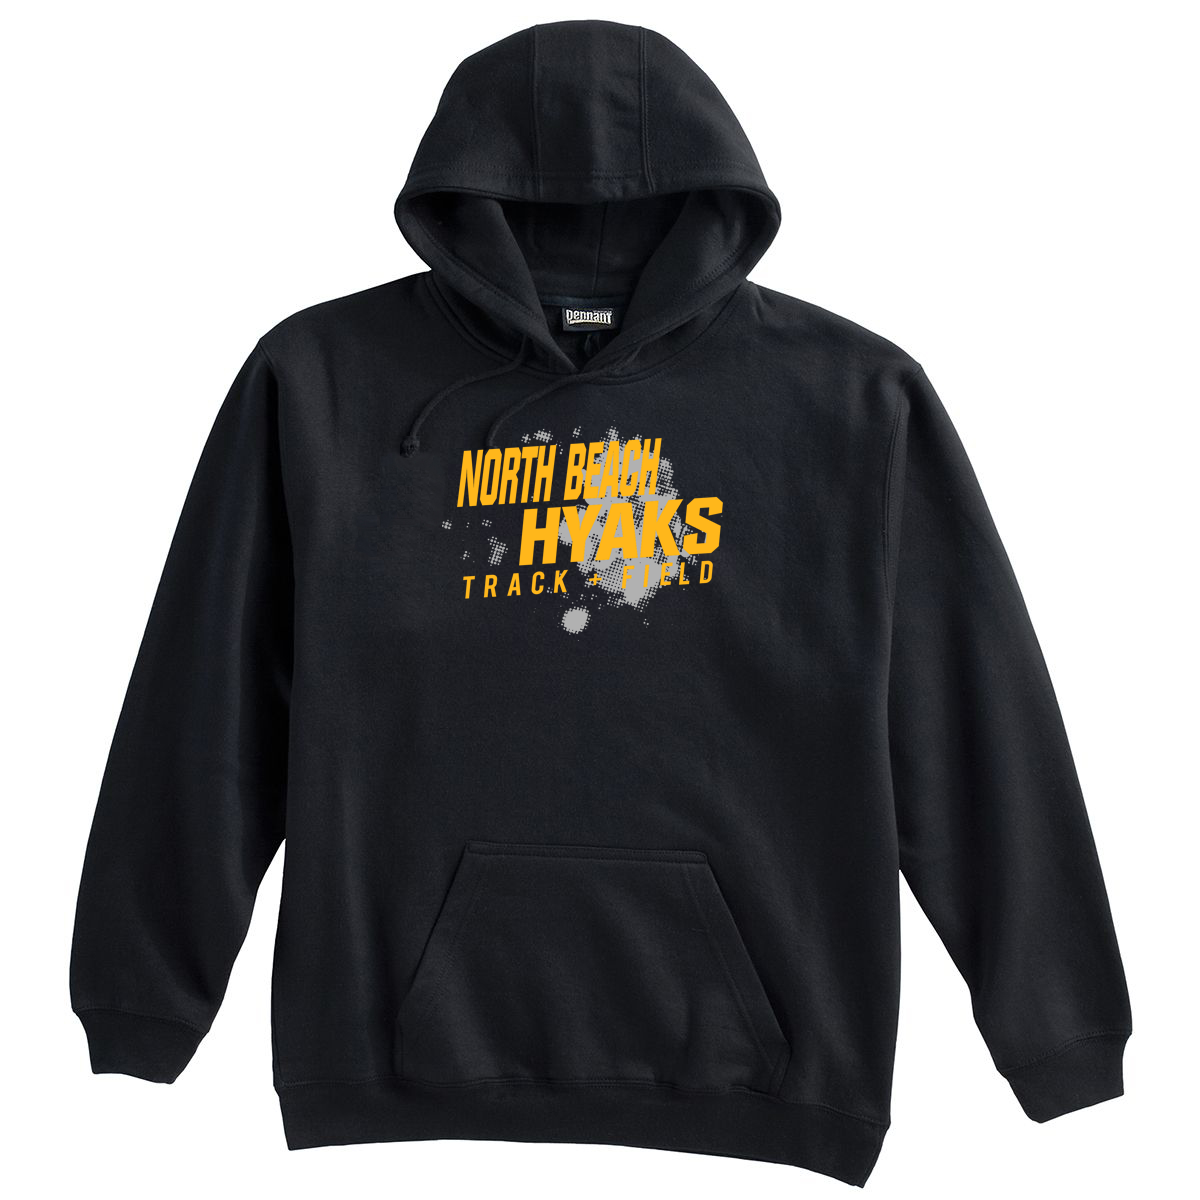 North Beach Track & Field Sweatshirt